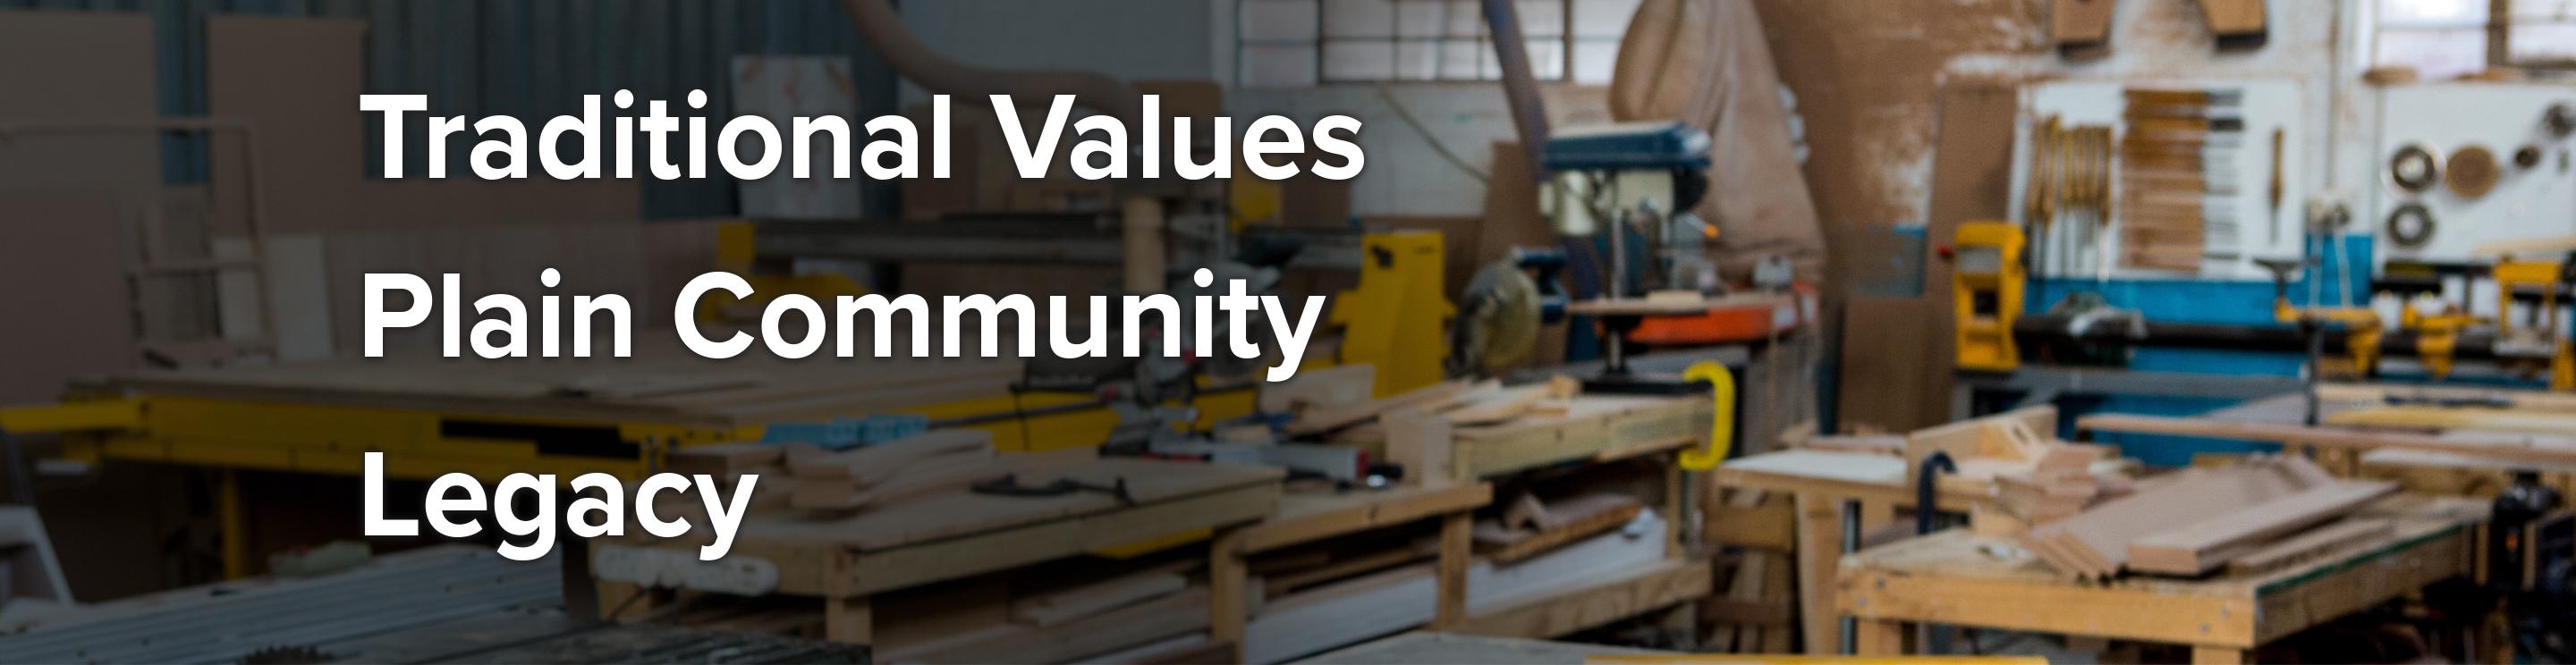 Traditional Values Plain Community Legacy - Shop picture